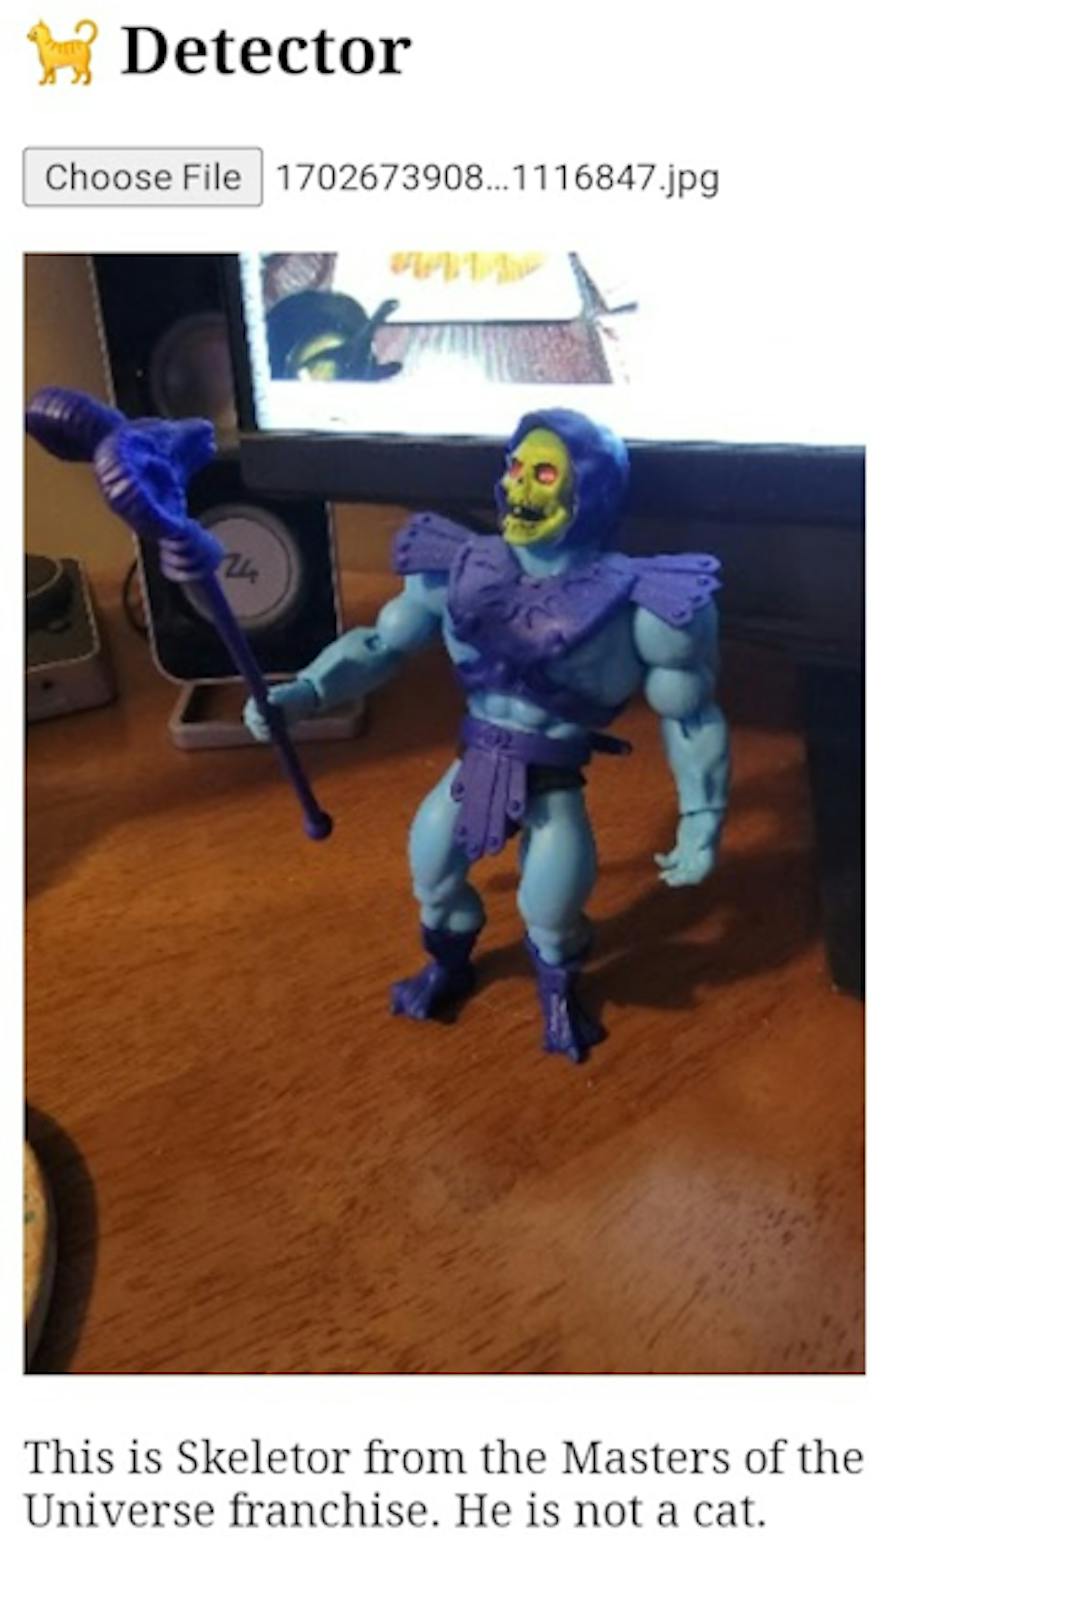 Une photo d'une figurine Skeletor